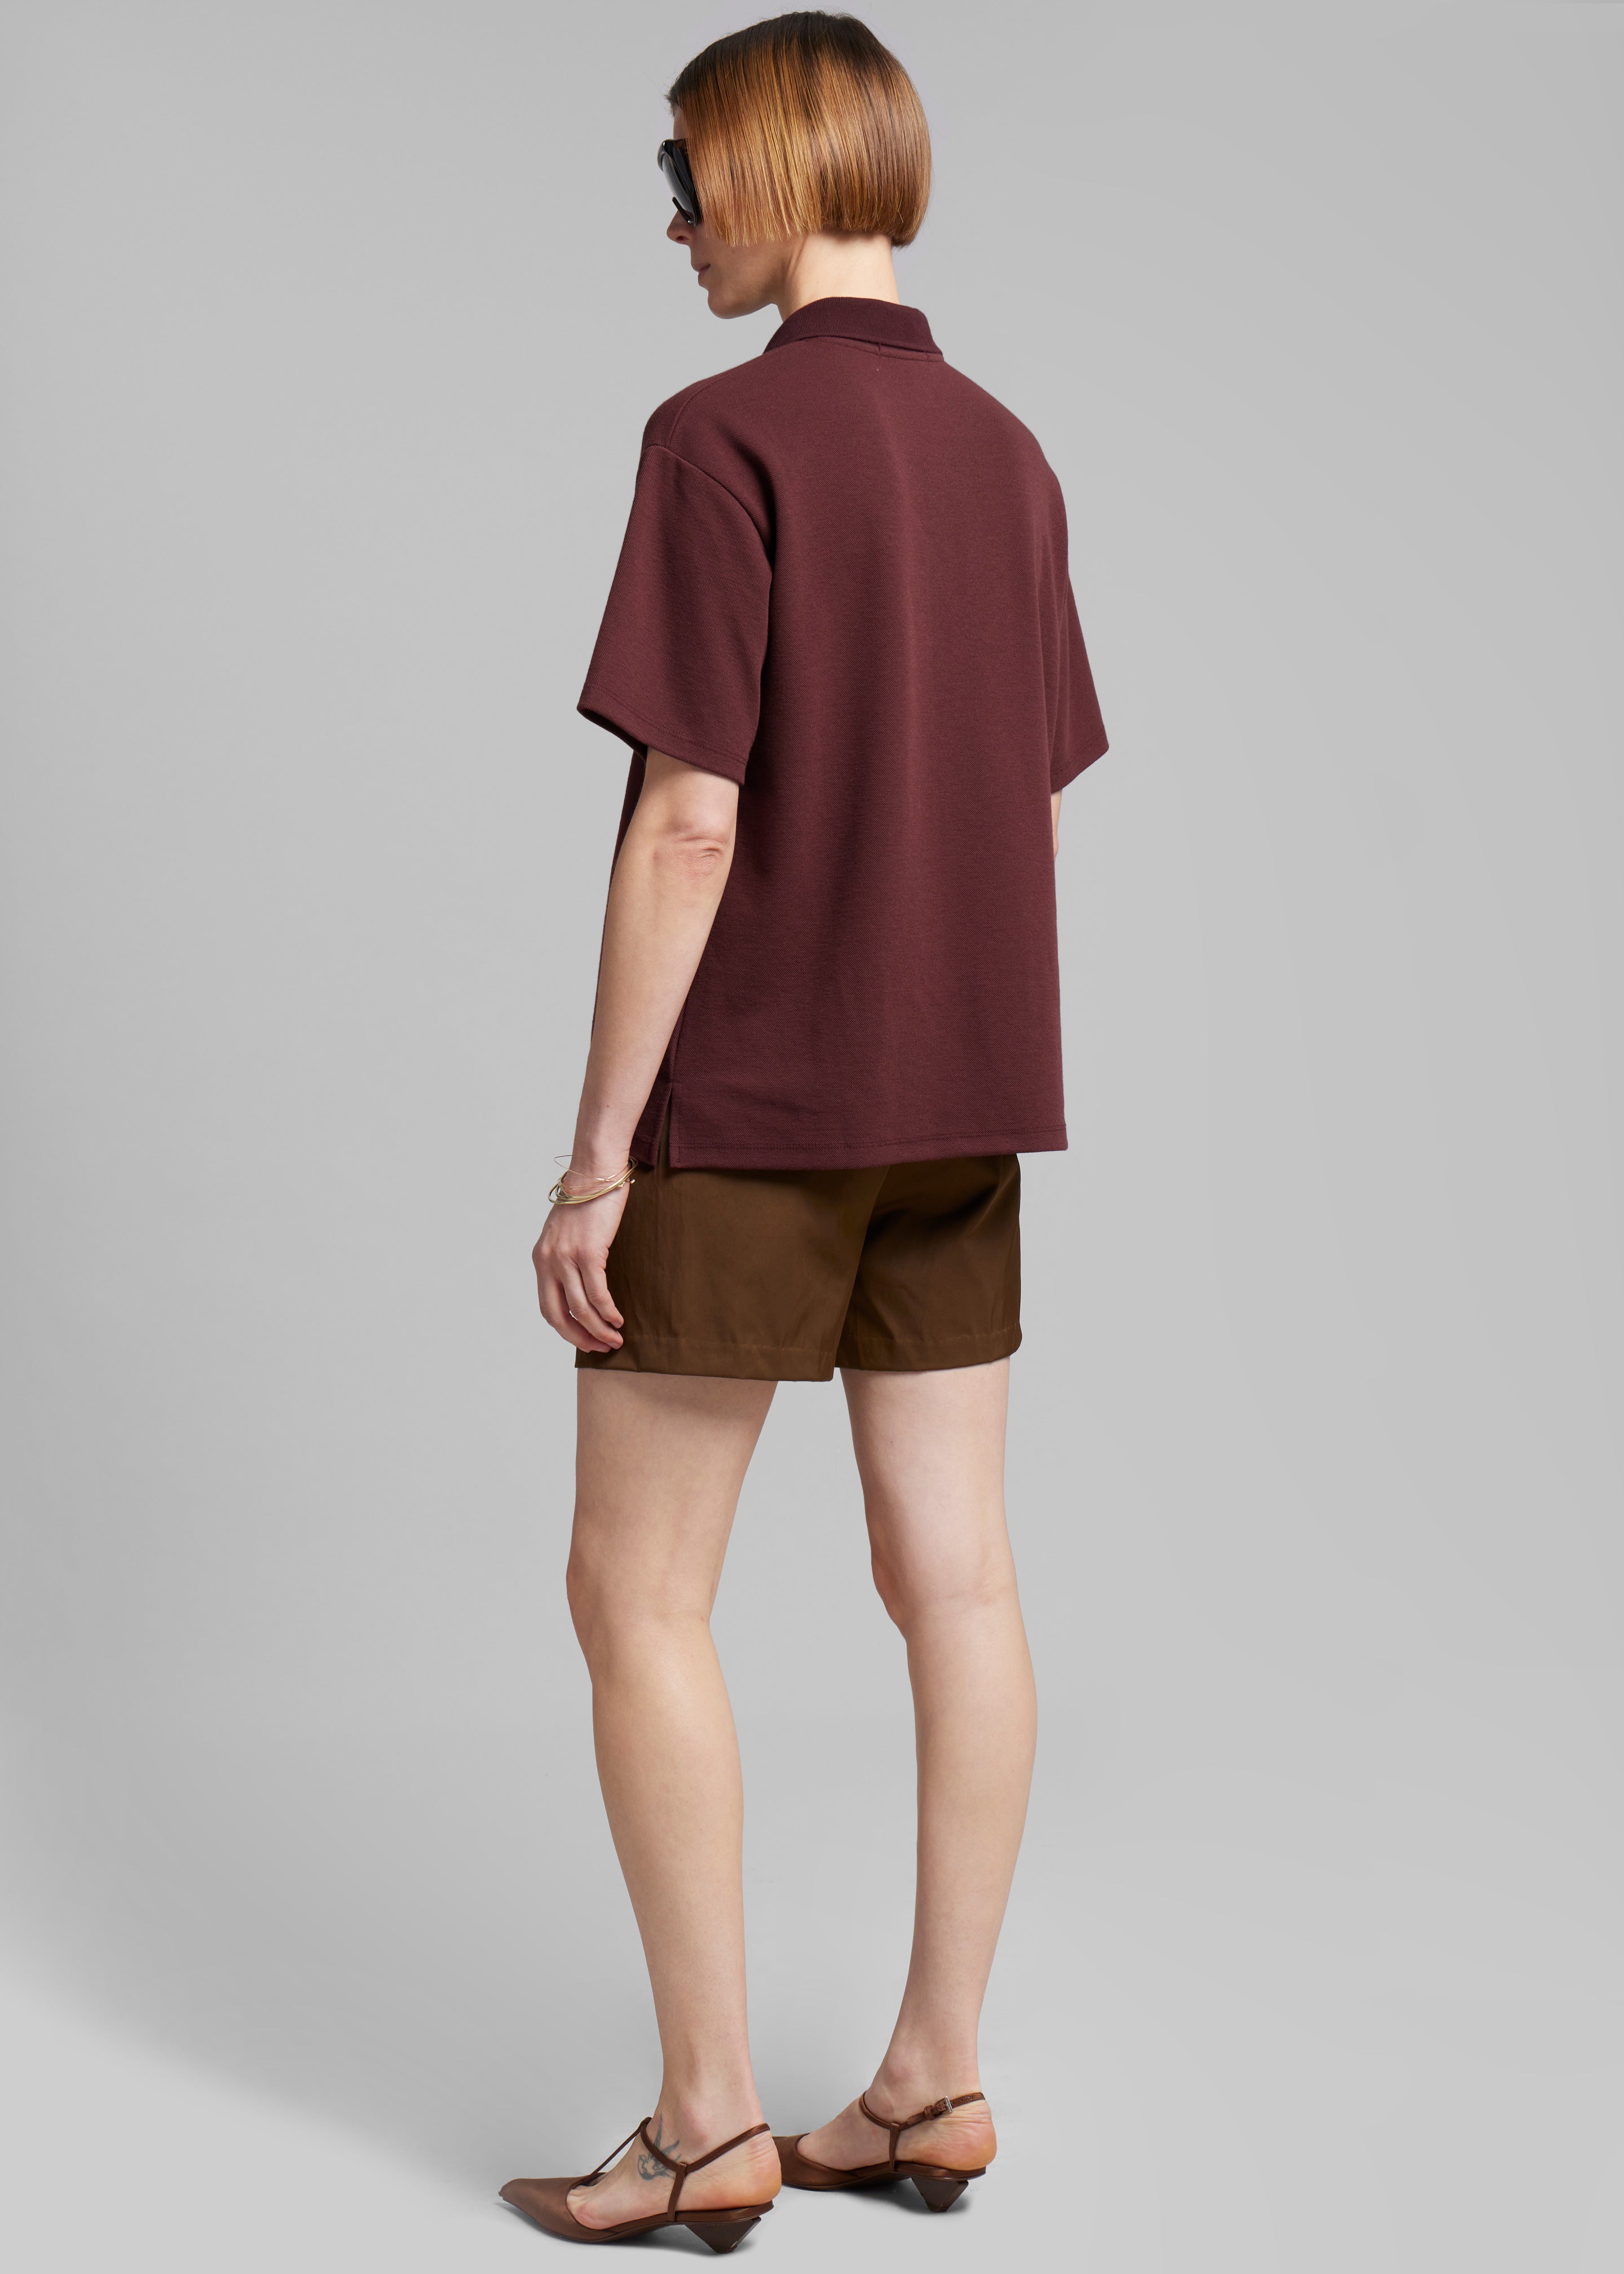 Dianne Polo Shirt - Burgundy - 9